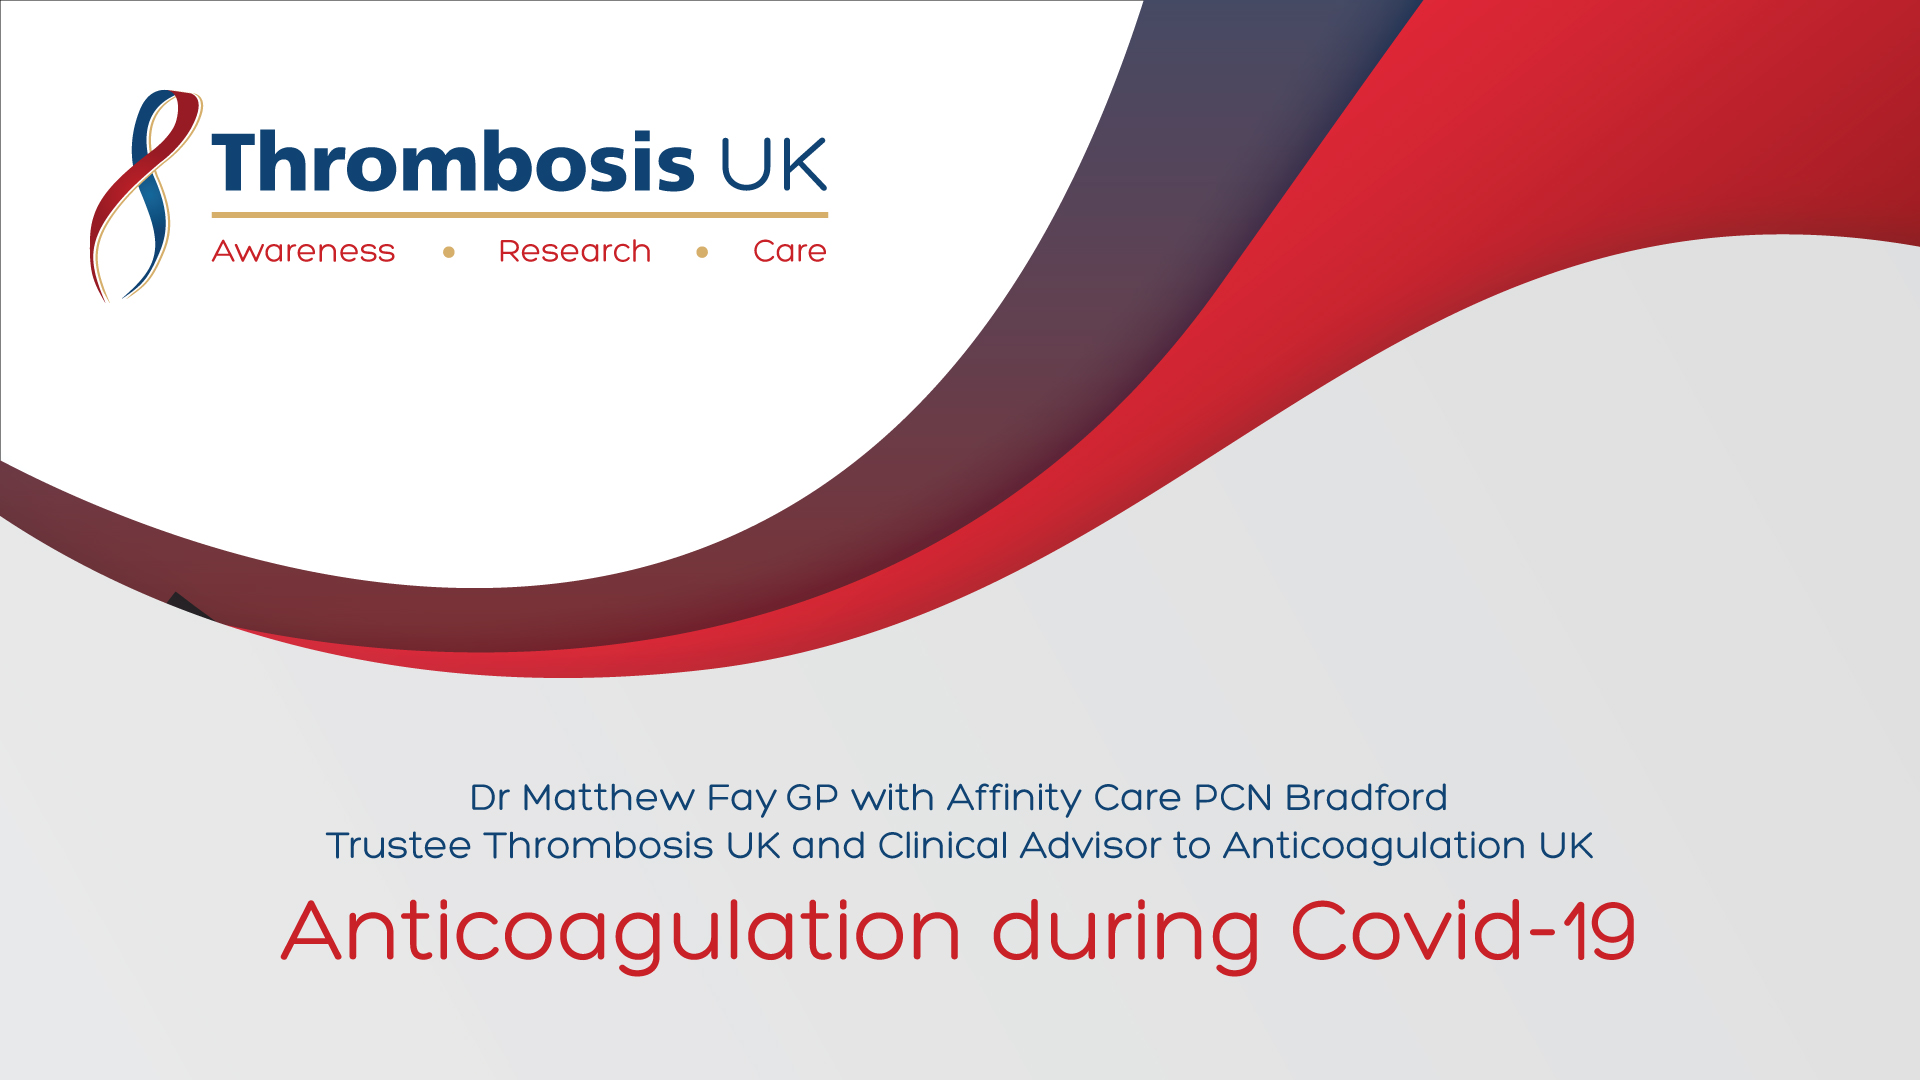 Anticoagulation during Covid-19